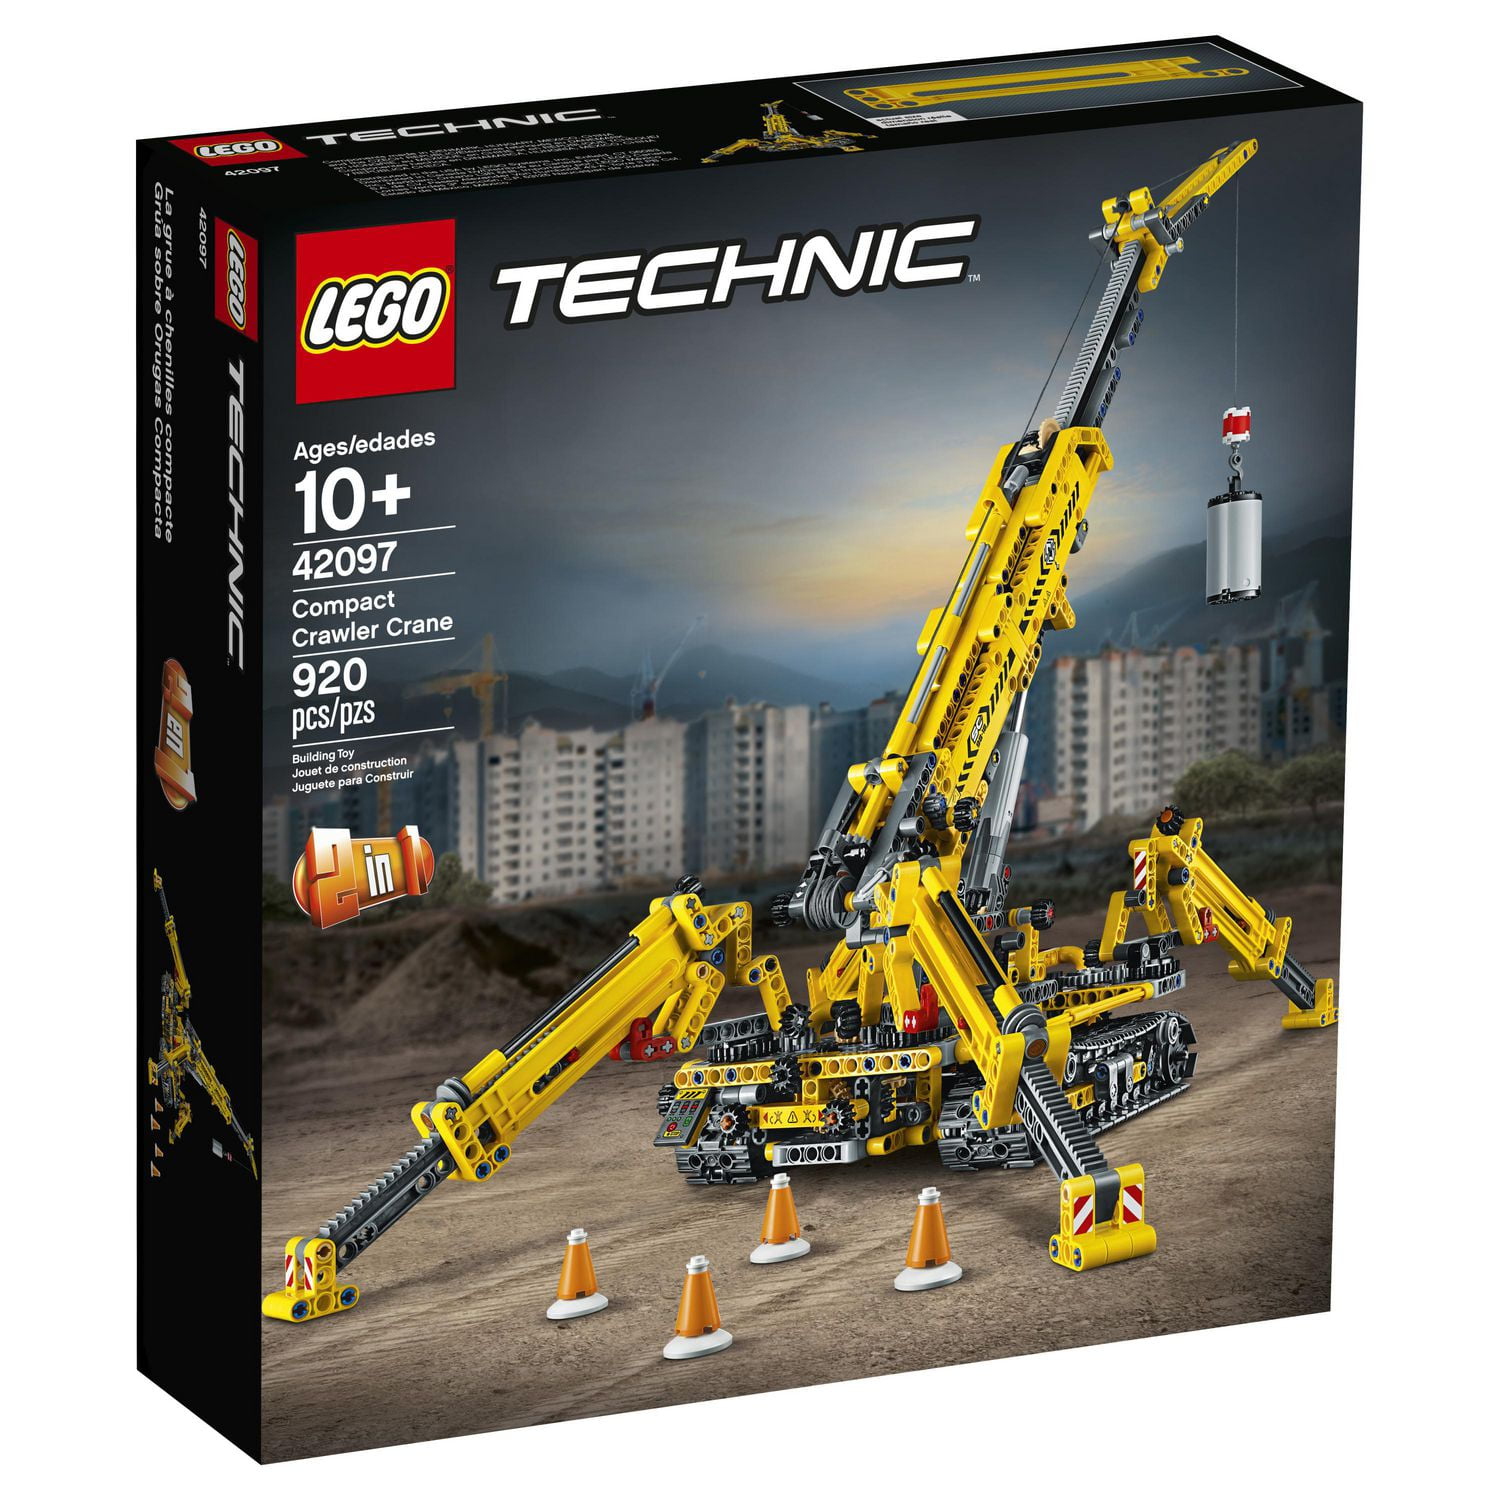 LEGO Technic Compact Crawler Crane 42097 Toy Building Kit (920